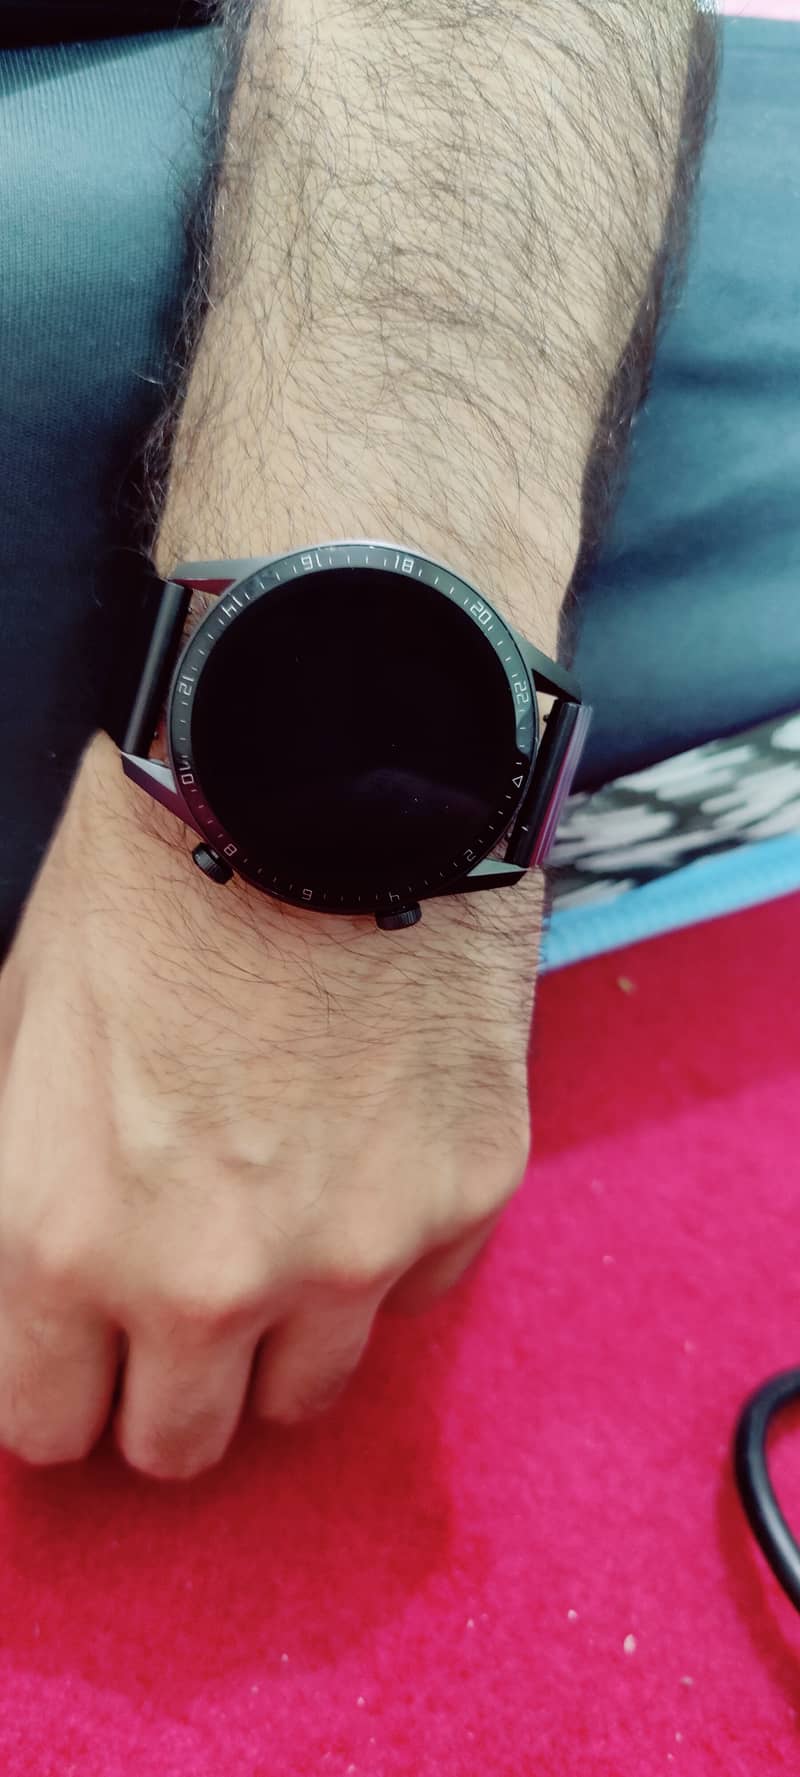 Huawei GT-2 (46mm) smart watch 2